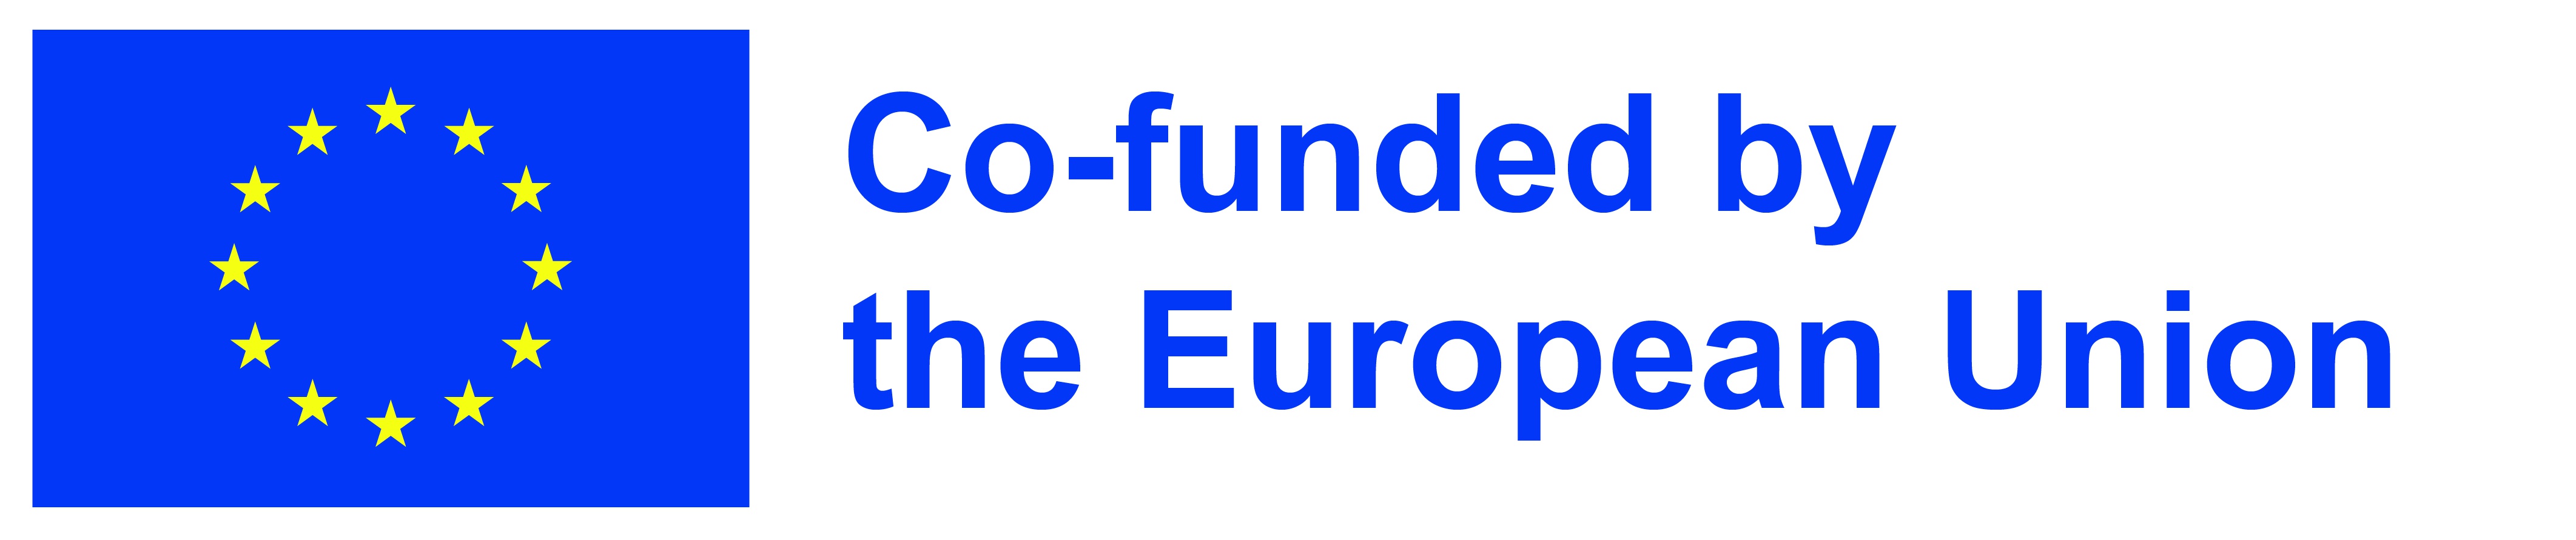 EU-Logo_co_funded.jpg